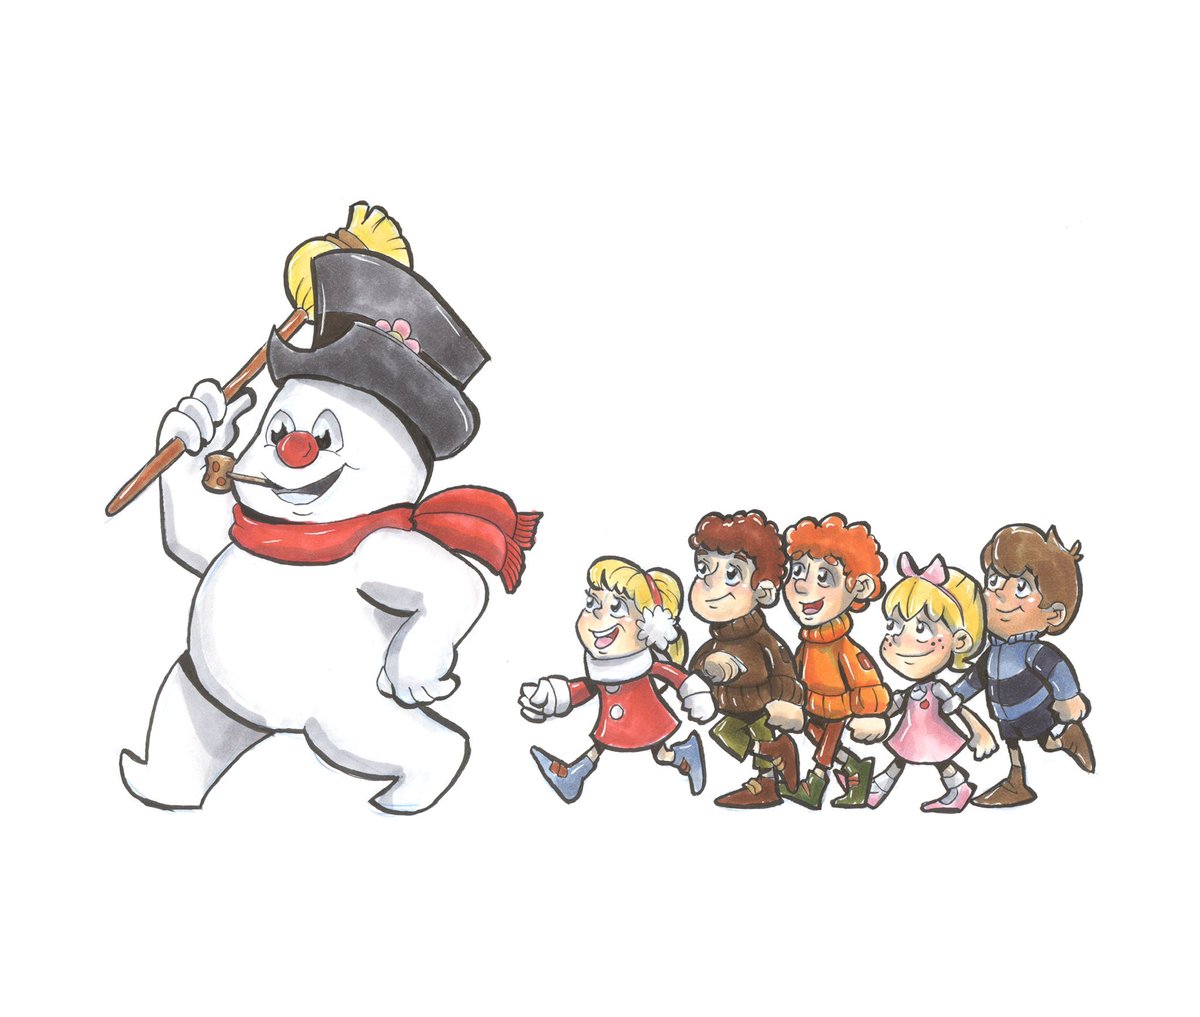 Frosty the Snowman
#christmas #christmascartoon #merrychristmas #christmasart #christmasdrawing #frostythesnowman #frosty #zladdsmithart #weloveillustration #vectorartist #smallartaccount #sketchinstadaily #sketchingart #sketchesoninstagram #sketchdump #sketchbooktour #sketchbook